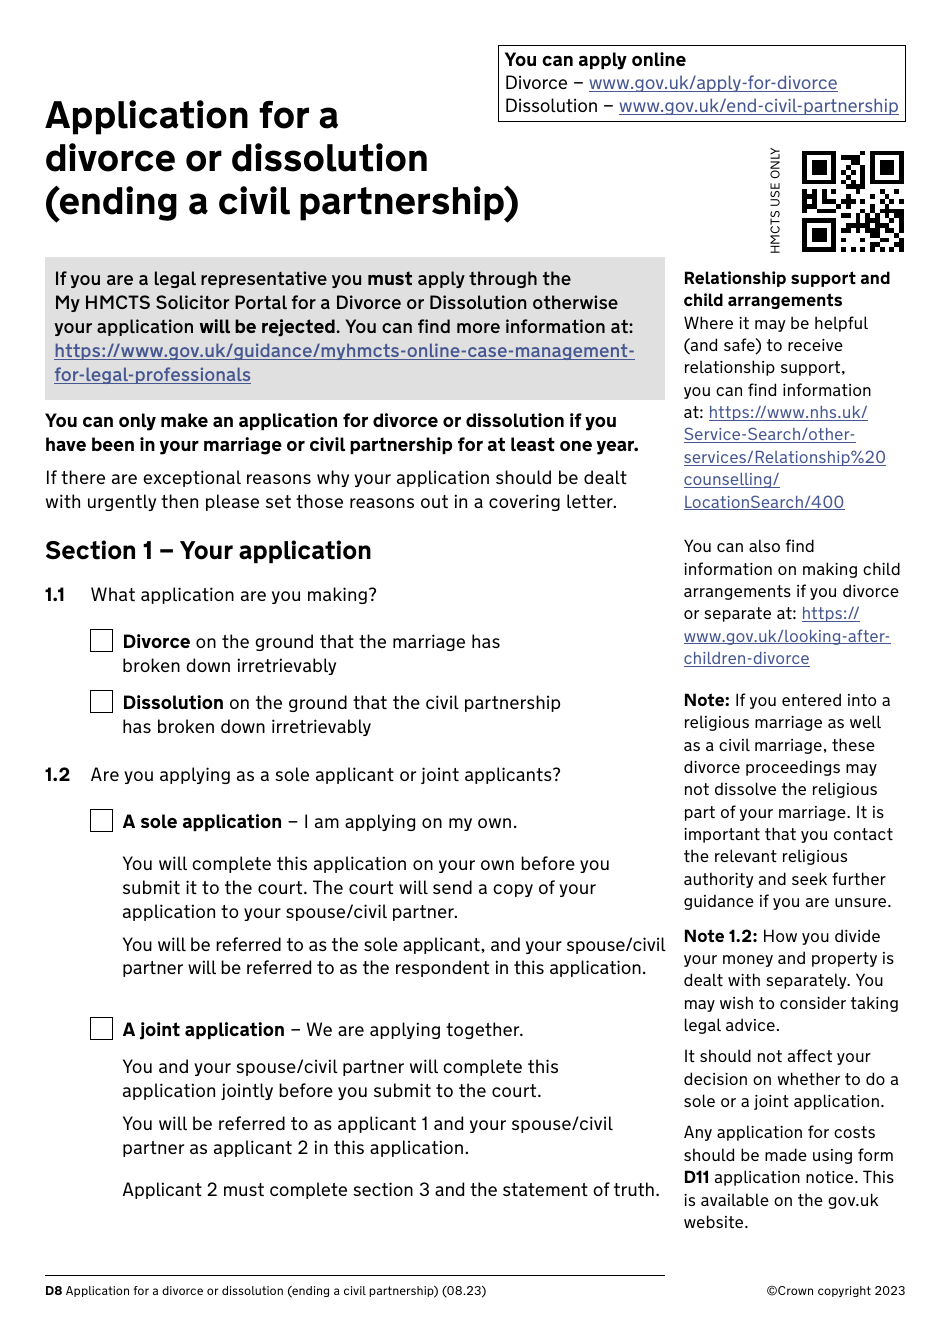 Application for a Divorce or Dissolution (Ending a Civil Partnership) - United Kingdom, Page 1